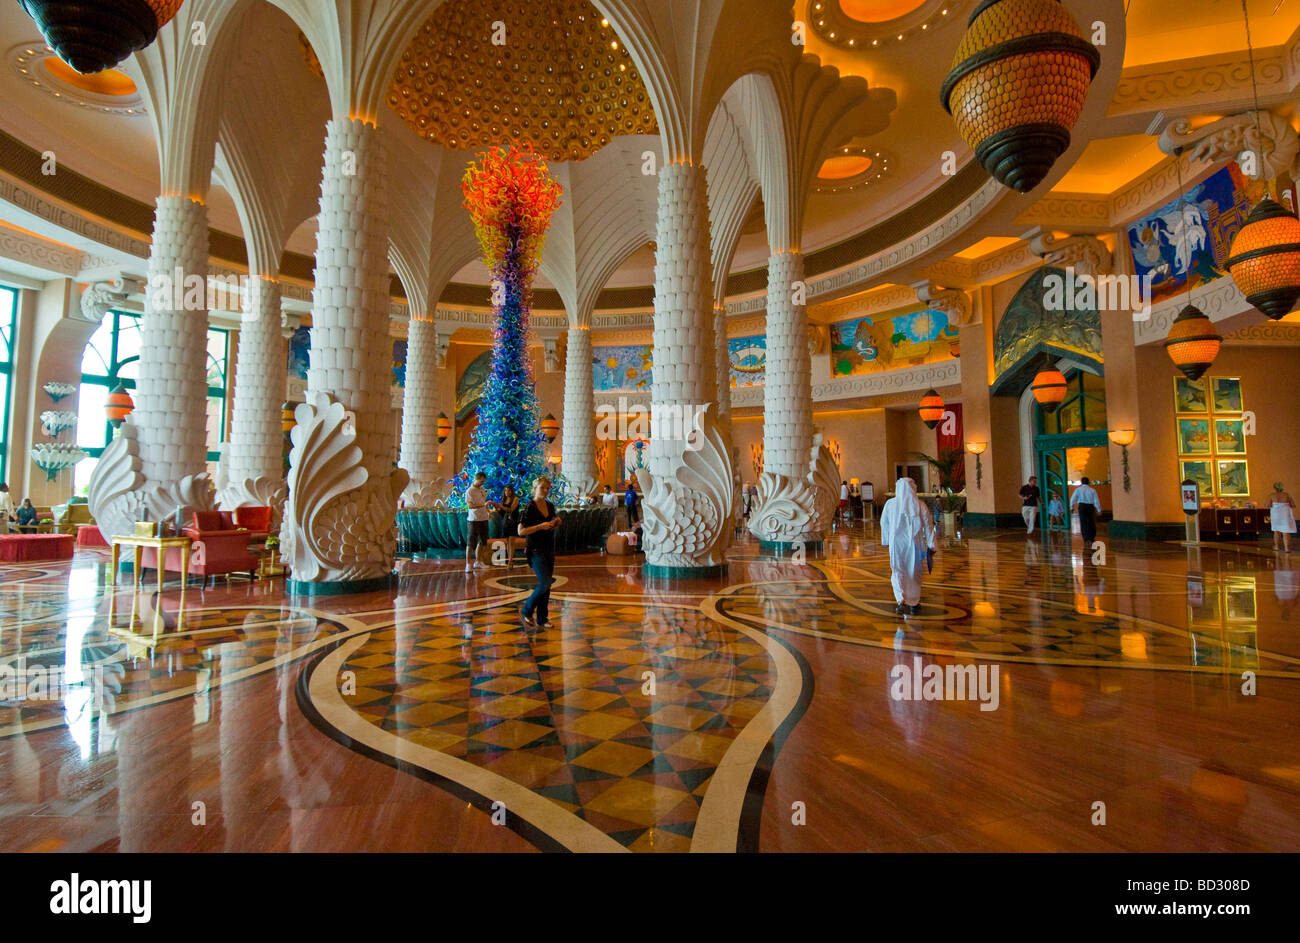 The lobby of the Atlantis hotel Dubai Stock Photo